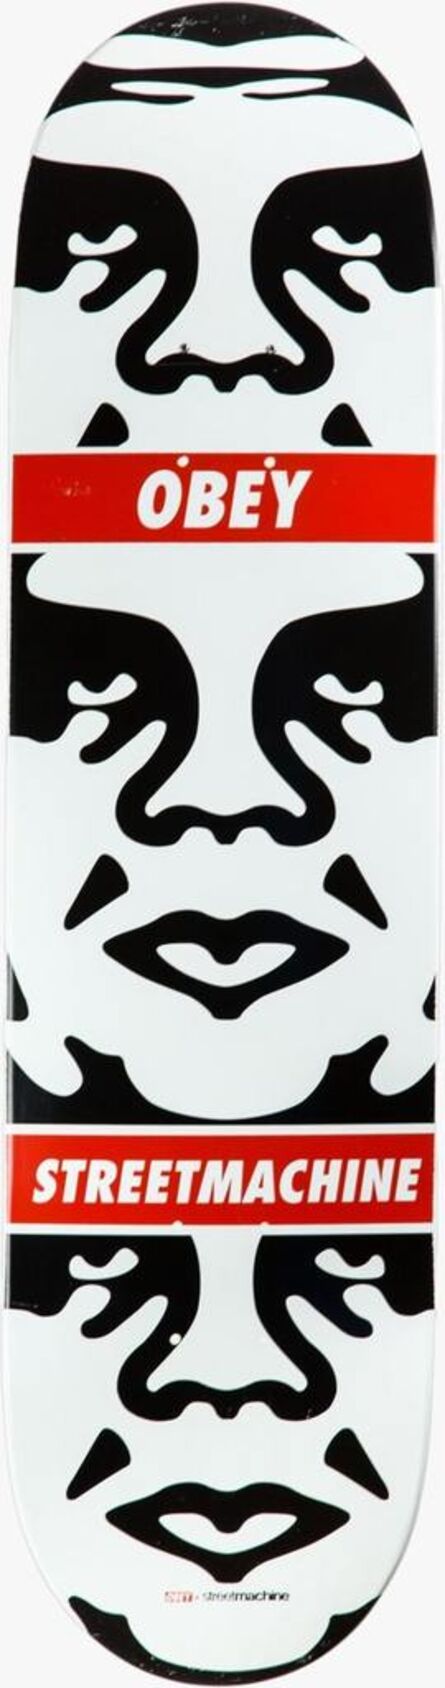 Shepard Fairey, ‘Andre 3 Face’, 2011